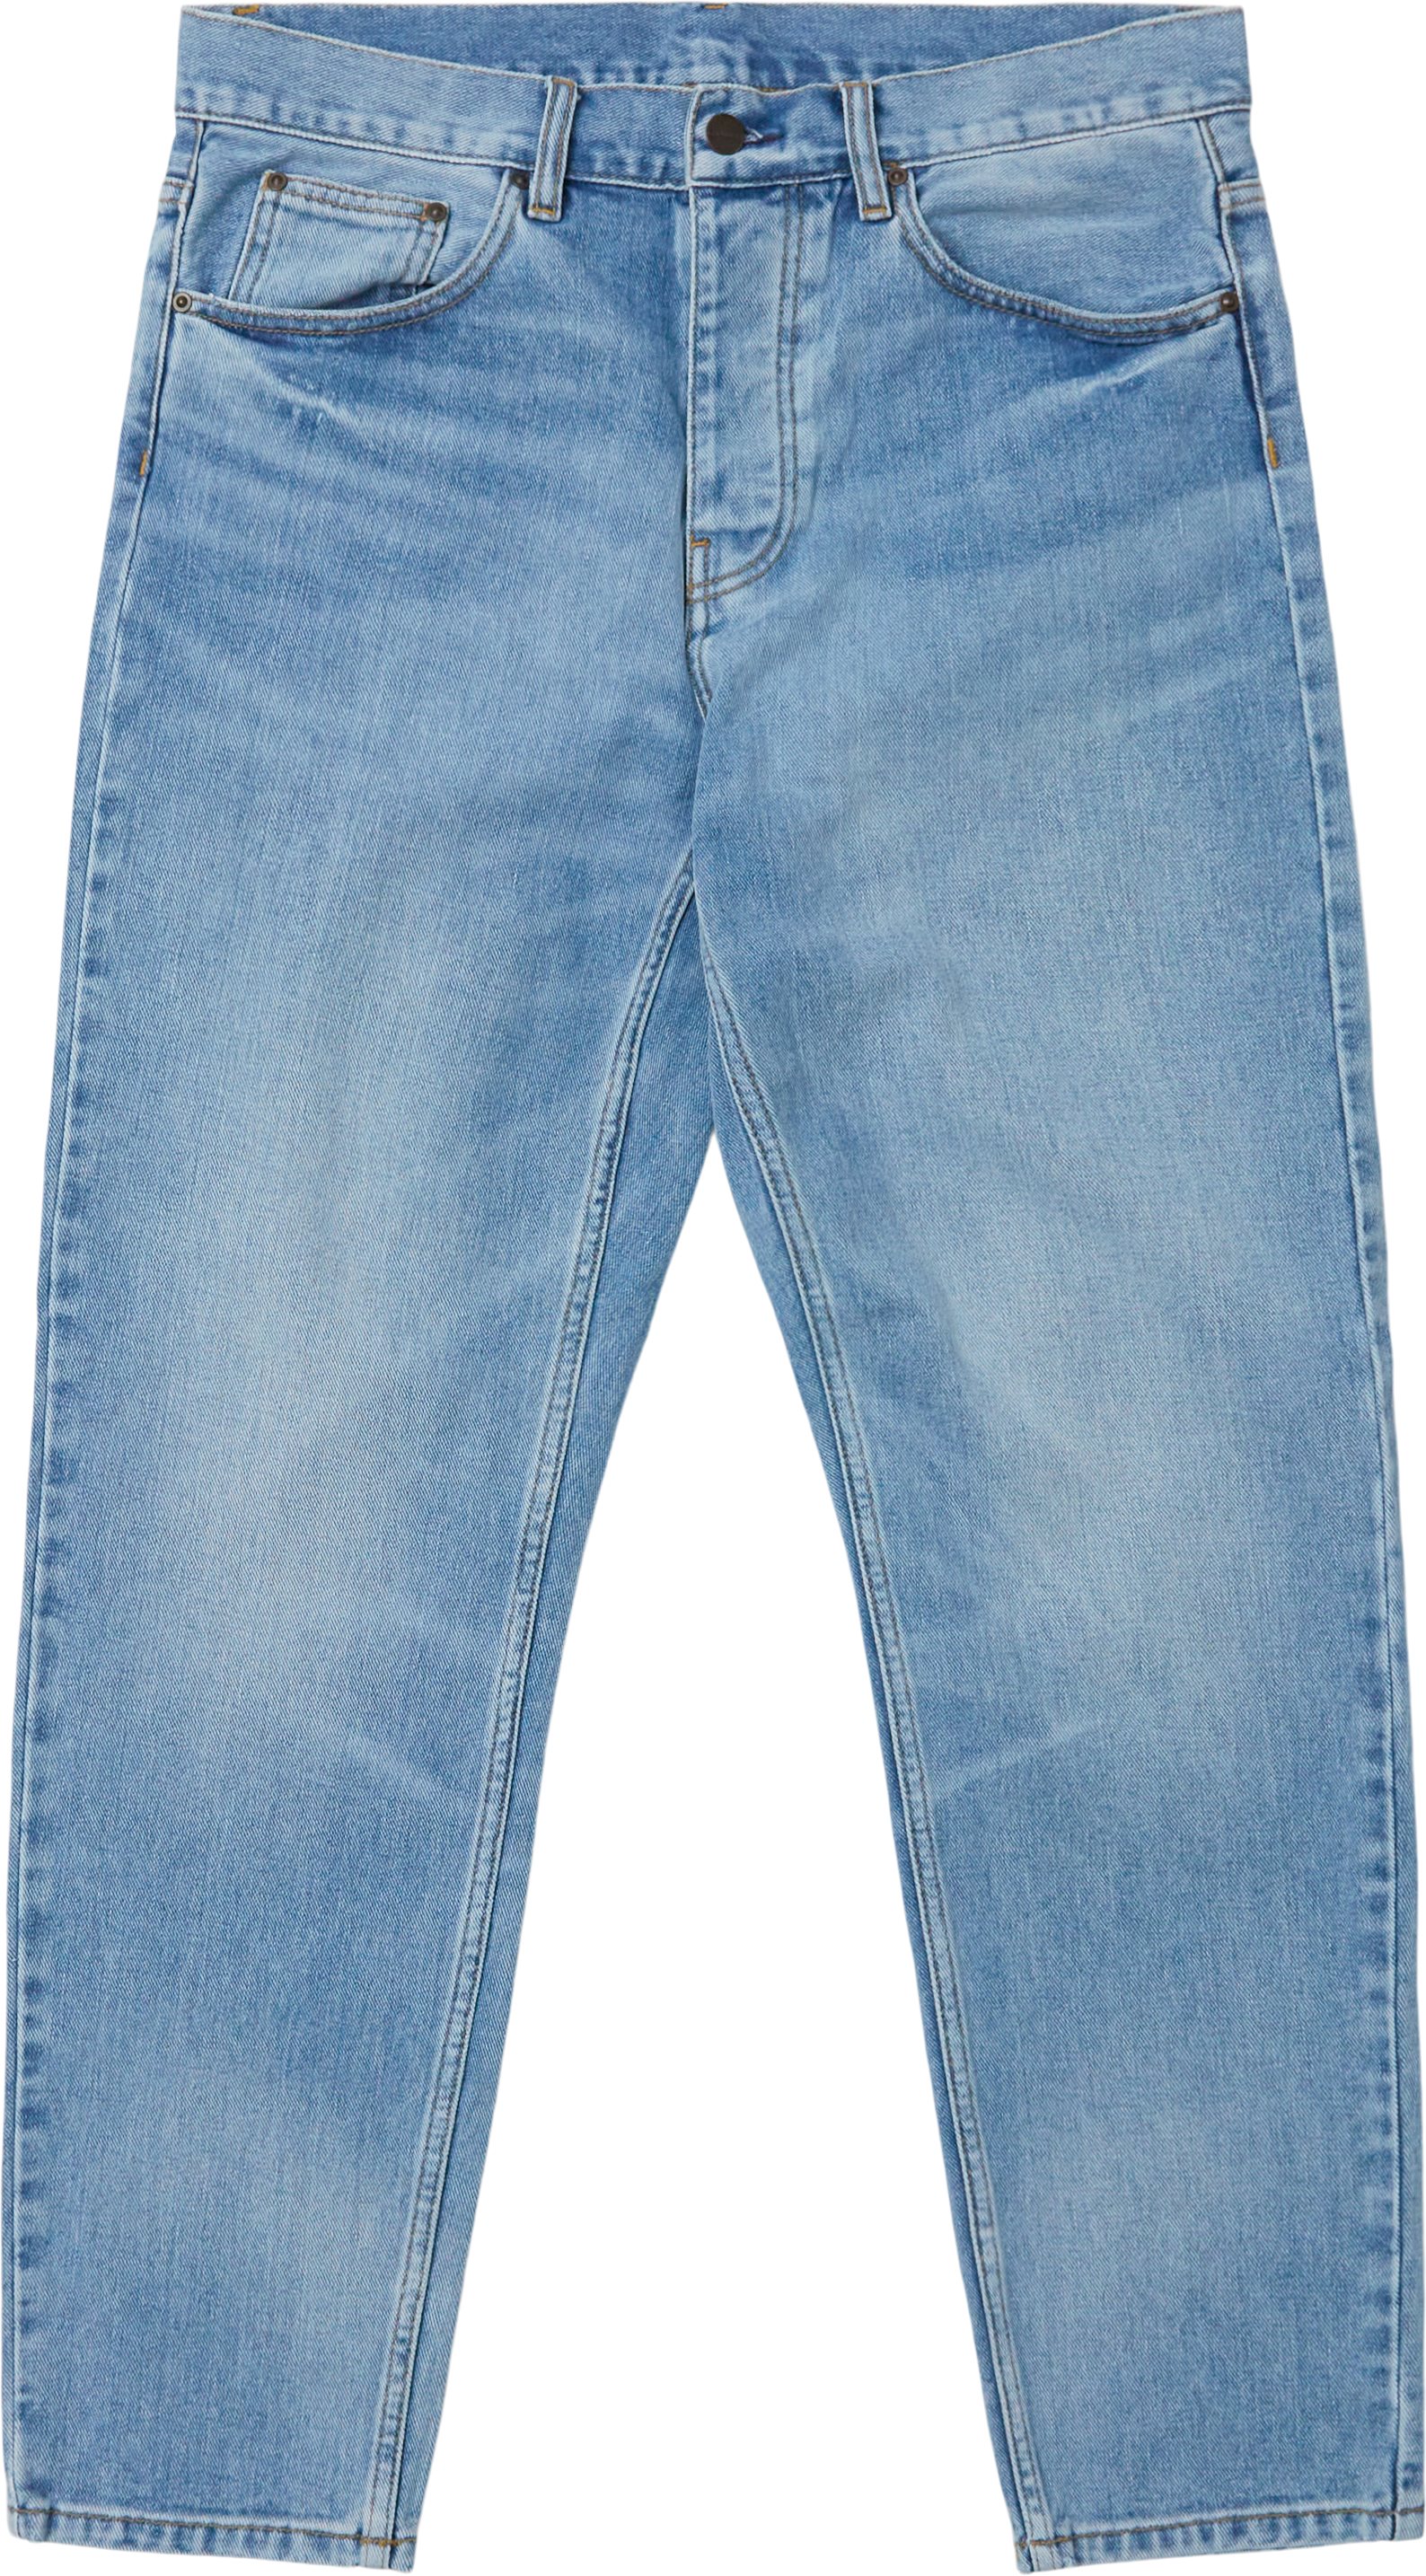 Newel Pant I029208  - Jeans - Regular fit - Denim